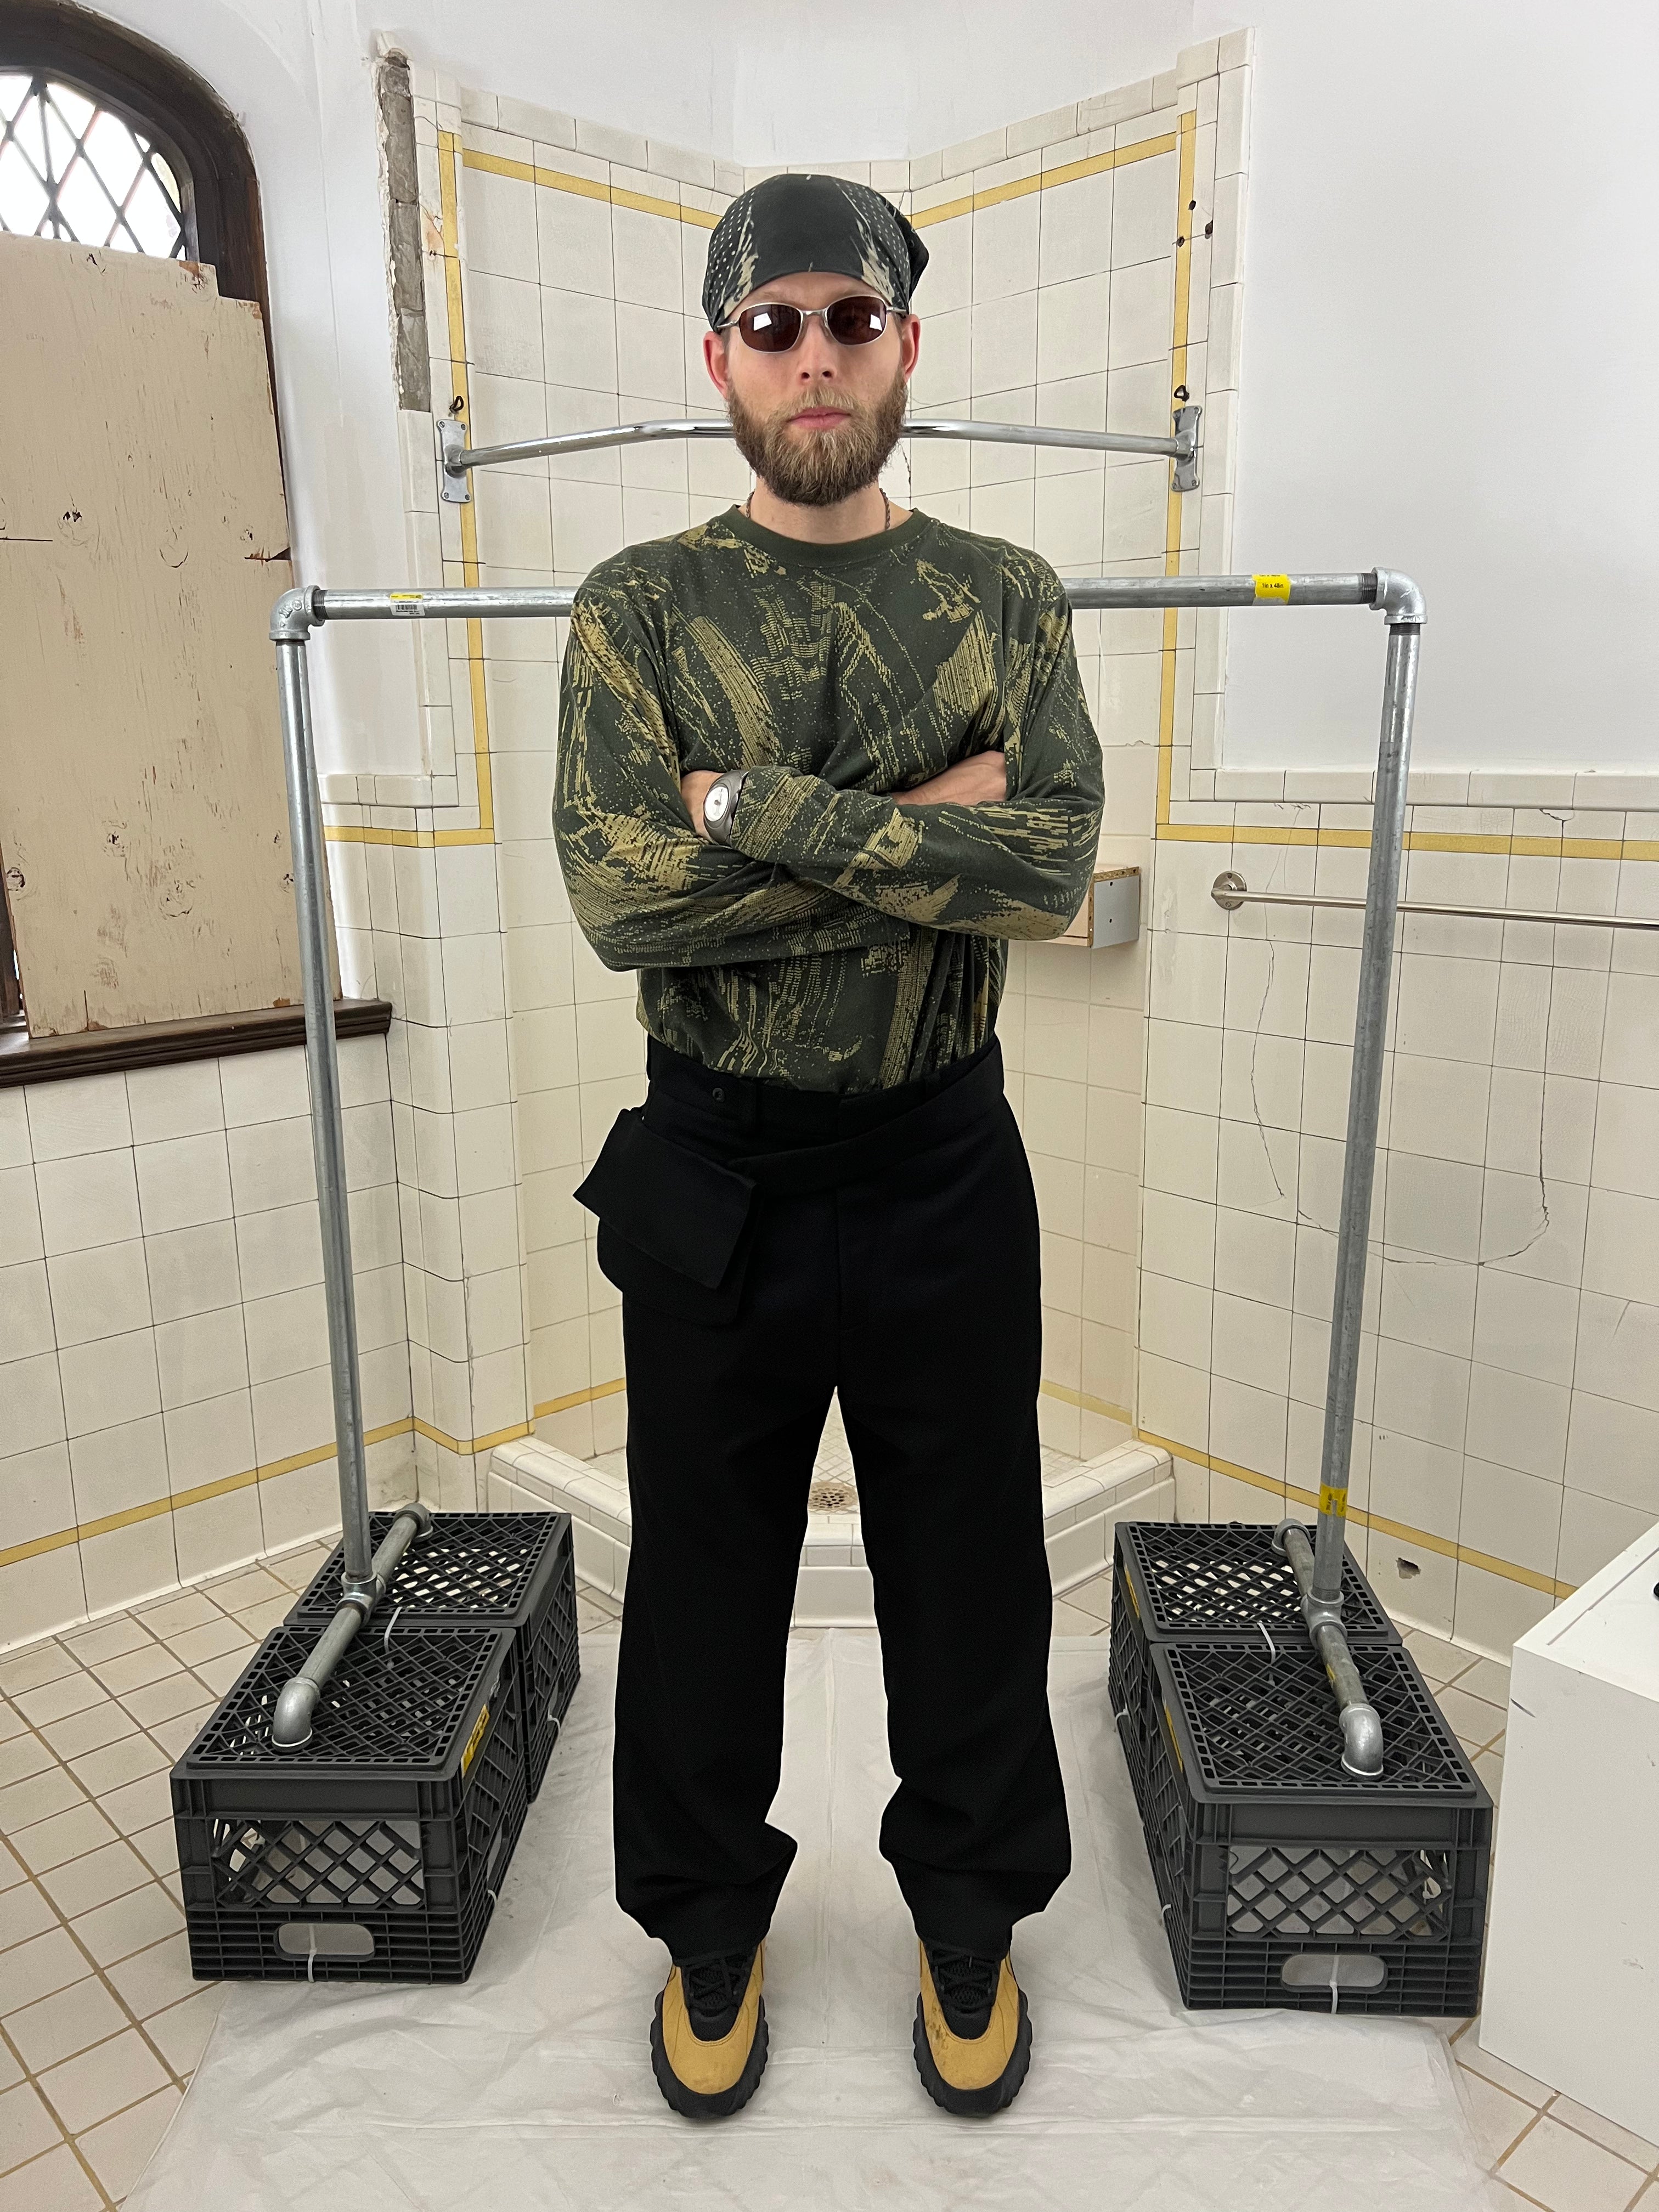 aw2017 Kiko Kostadinov 3D Double Pleat Waist Bag Trousers - Size XL |  Constant Practice